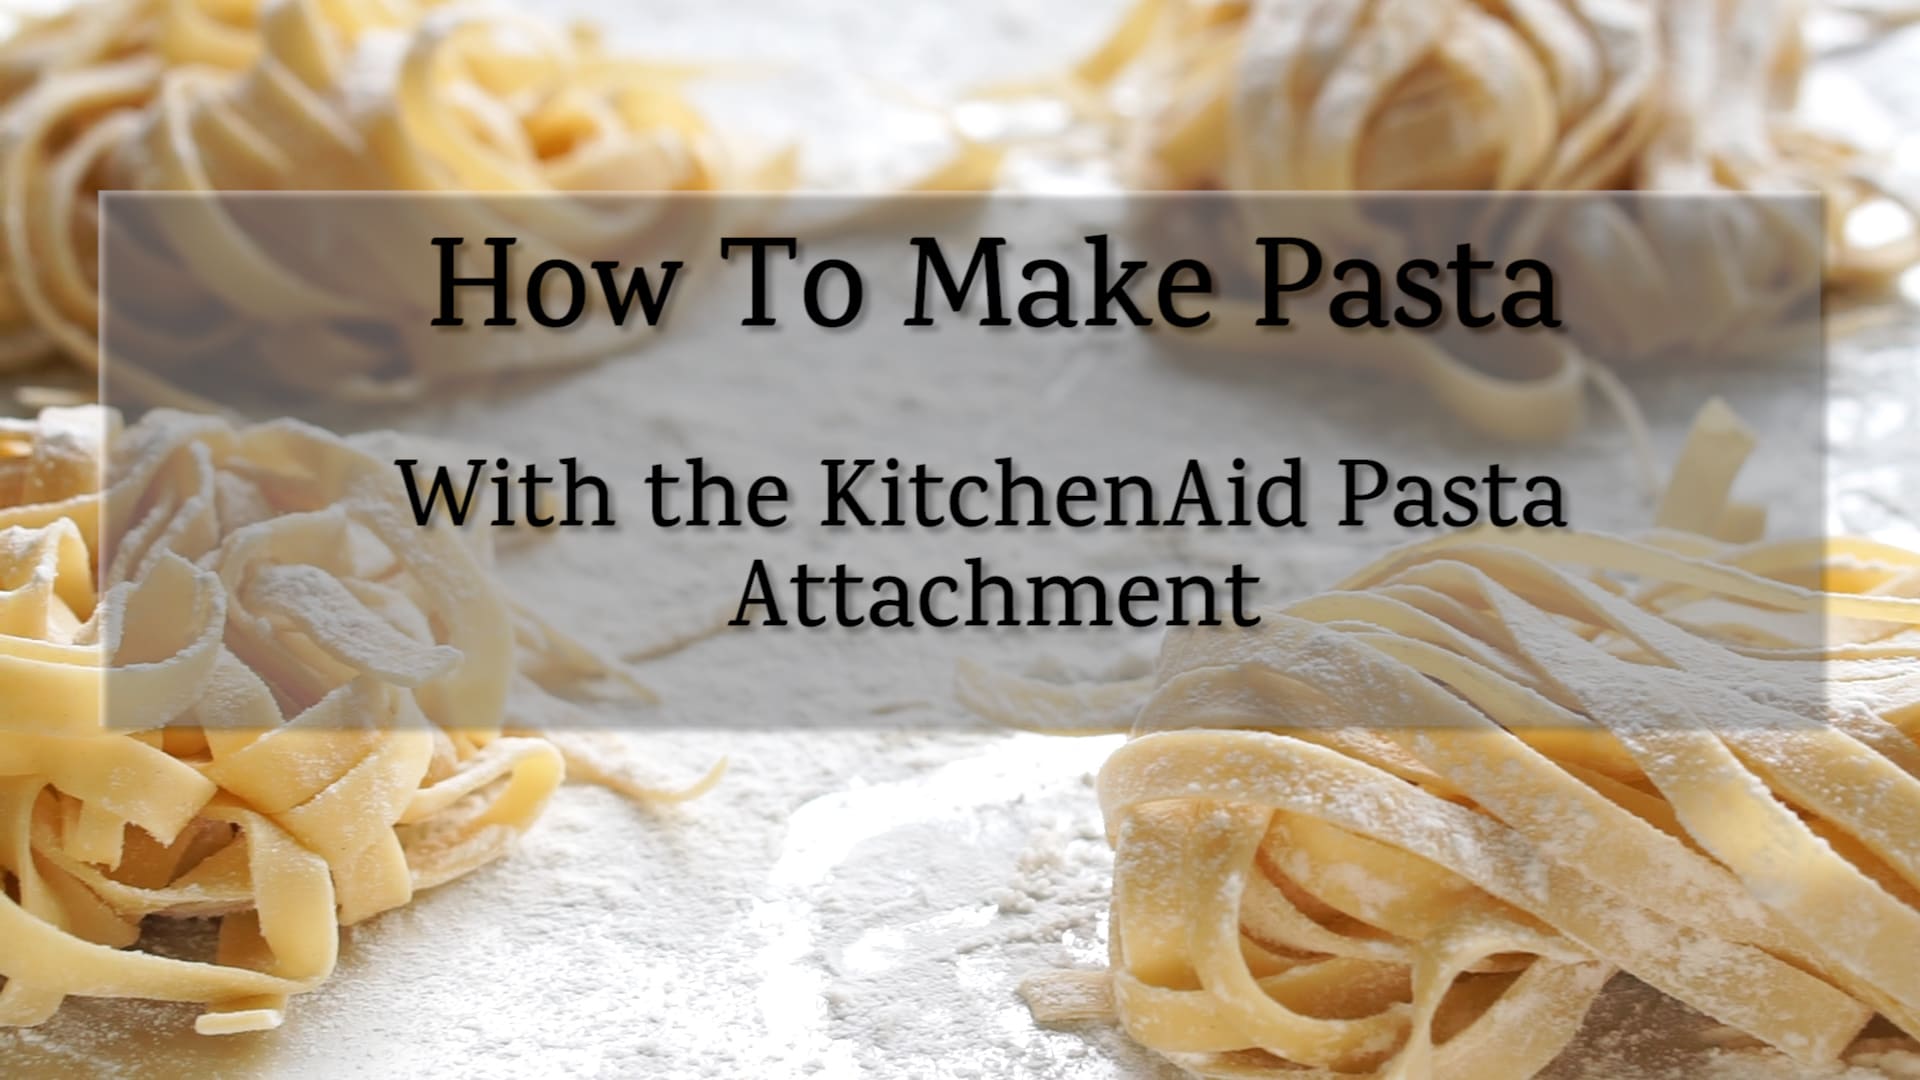 Make fresh pasta the easy way. This attachment tranforms your @Kitchen, kitchen aid pasta attachment